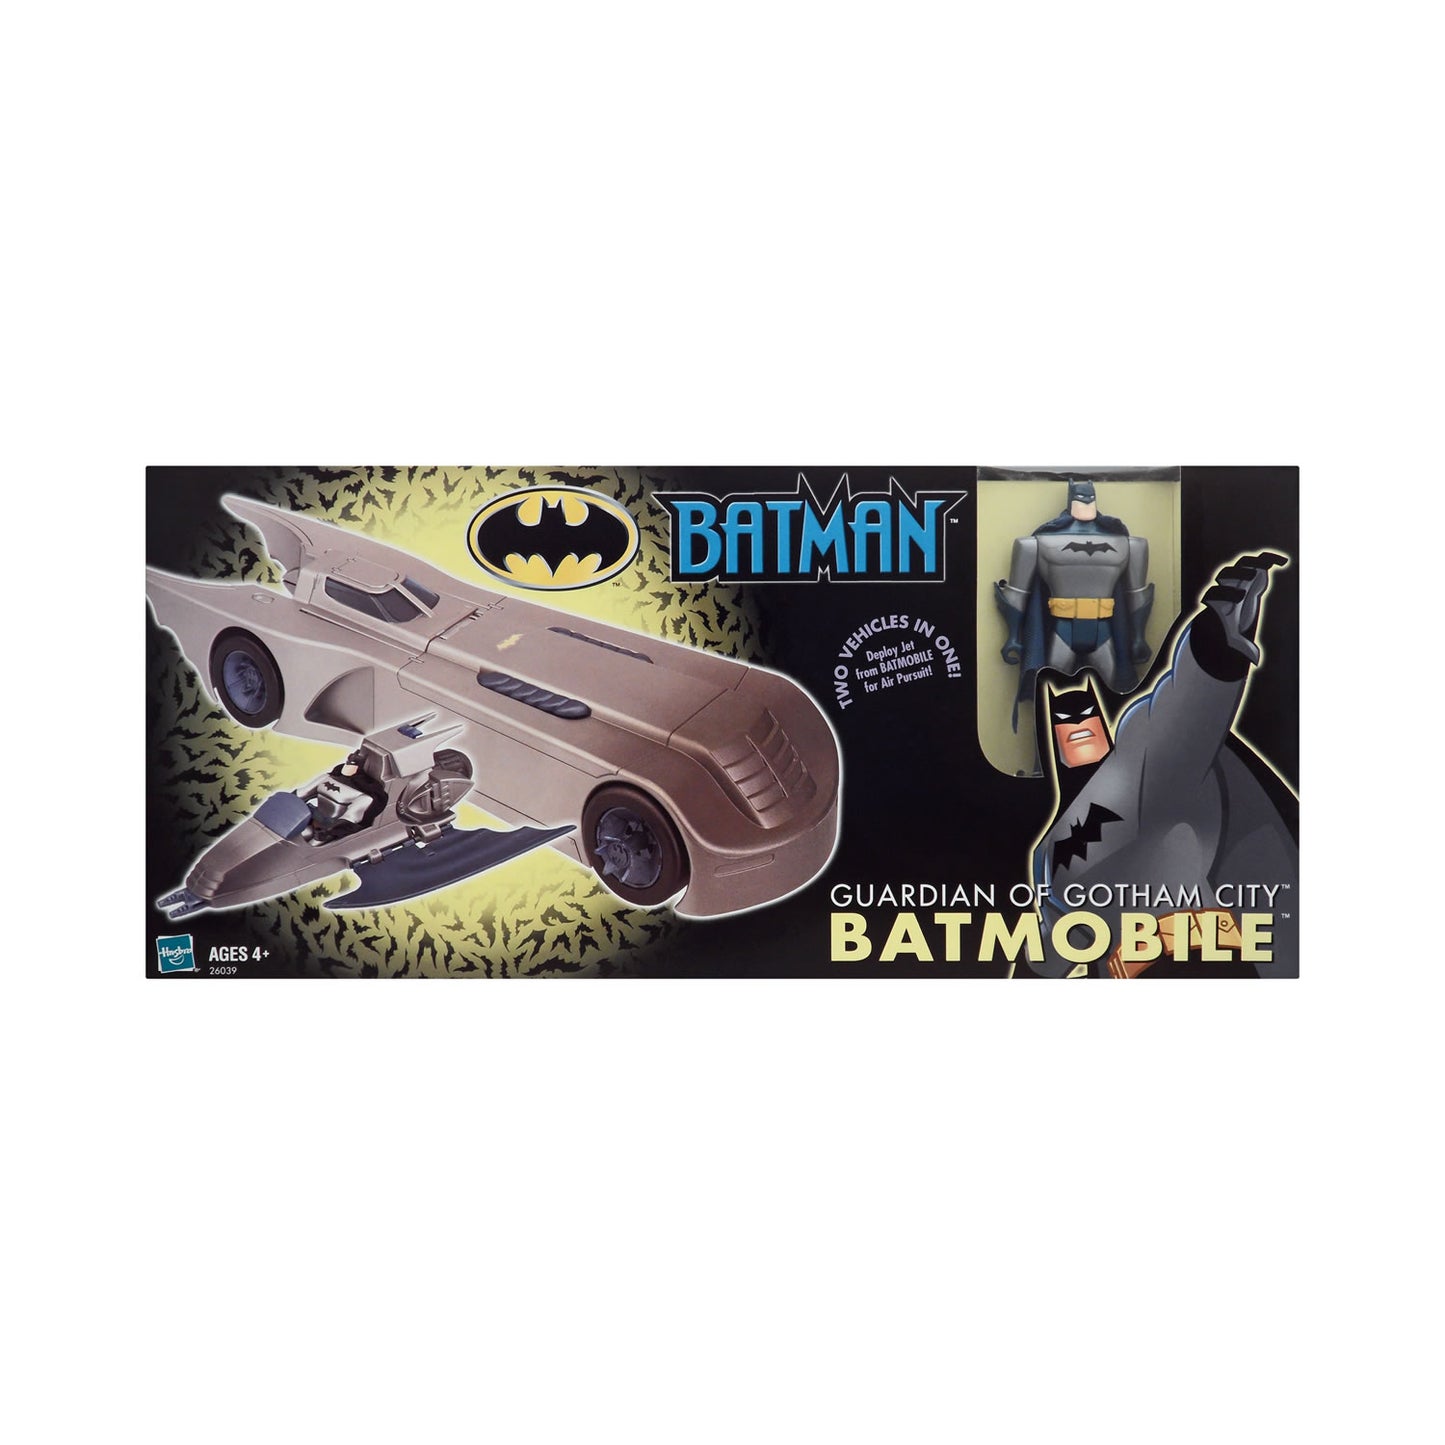 Guardian of Gotham City Batmobile from Batman